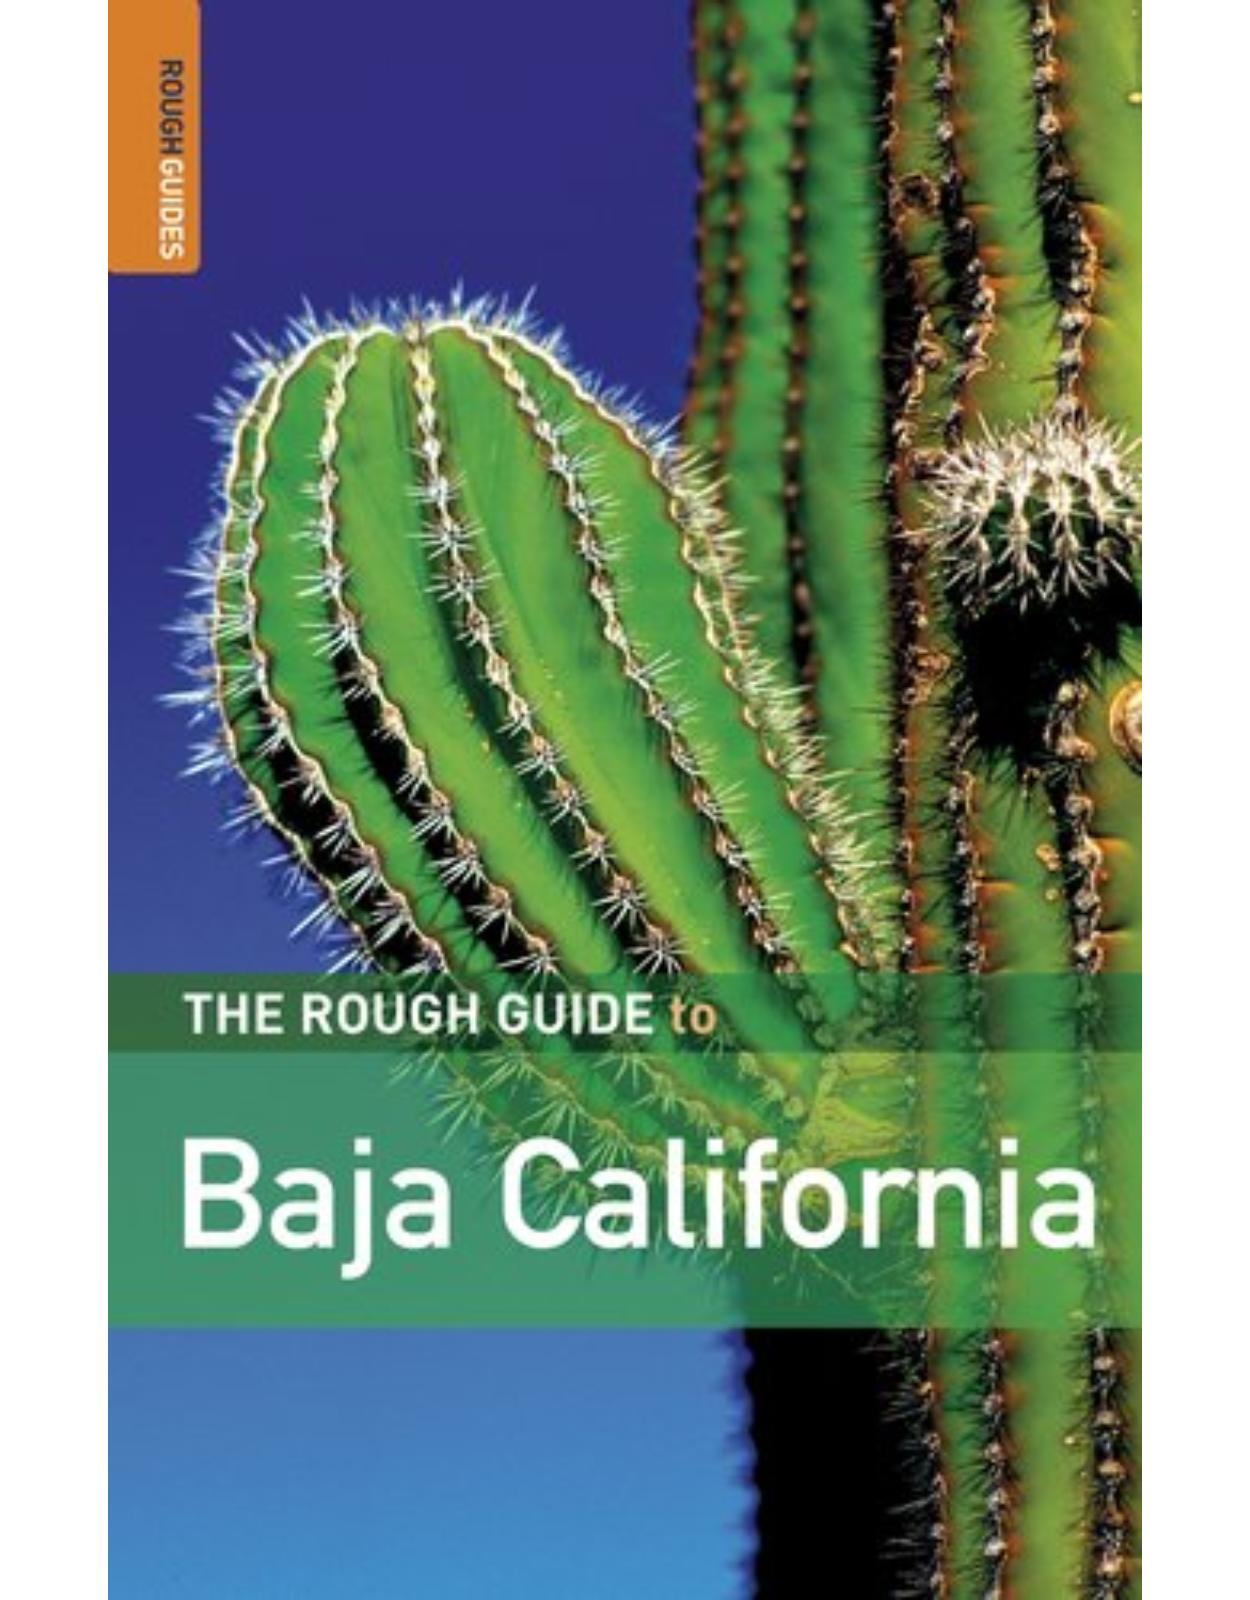 The Rough Guide to Baja California